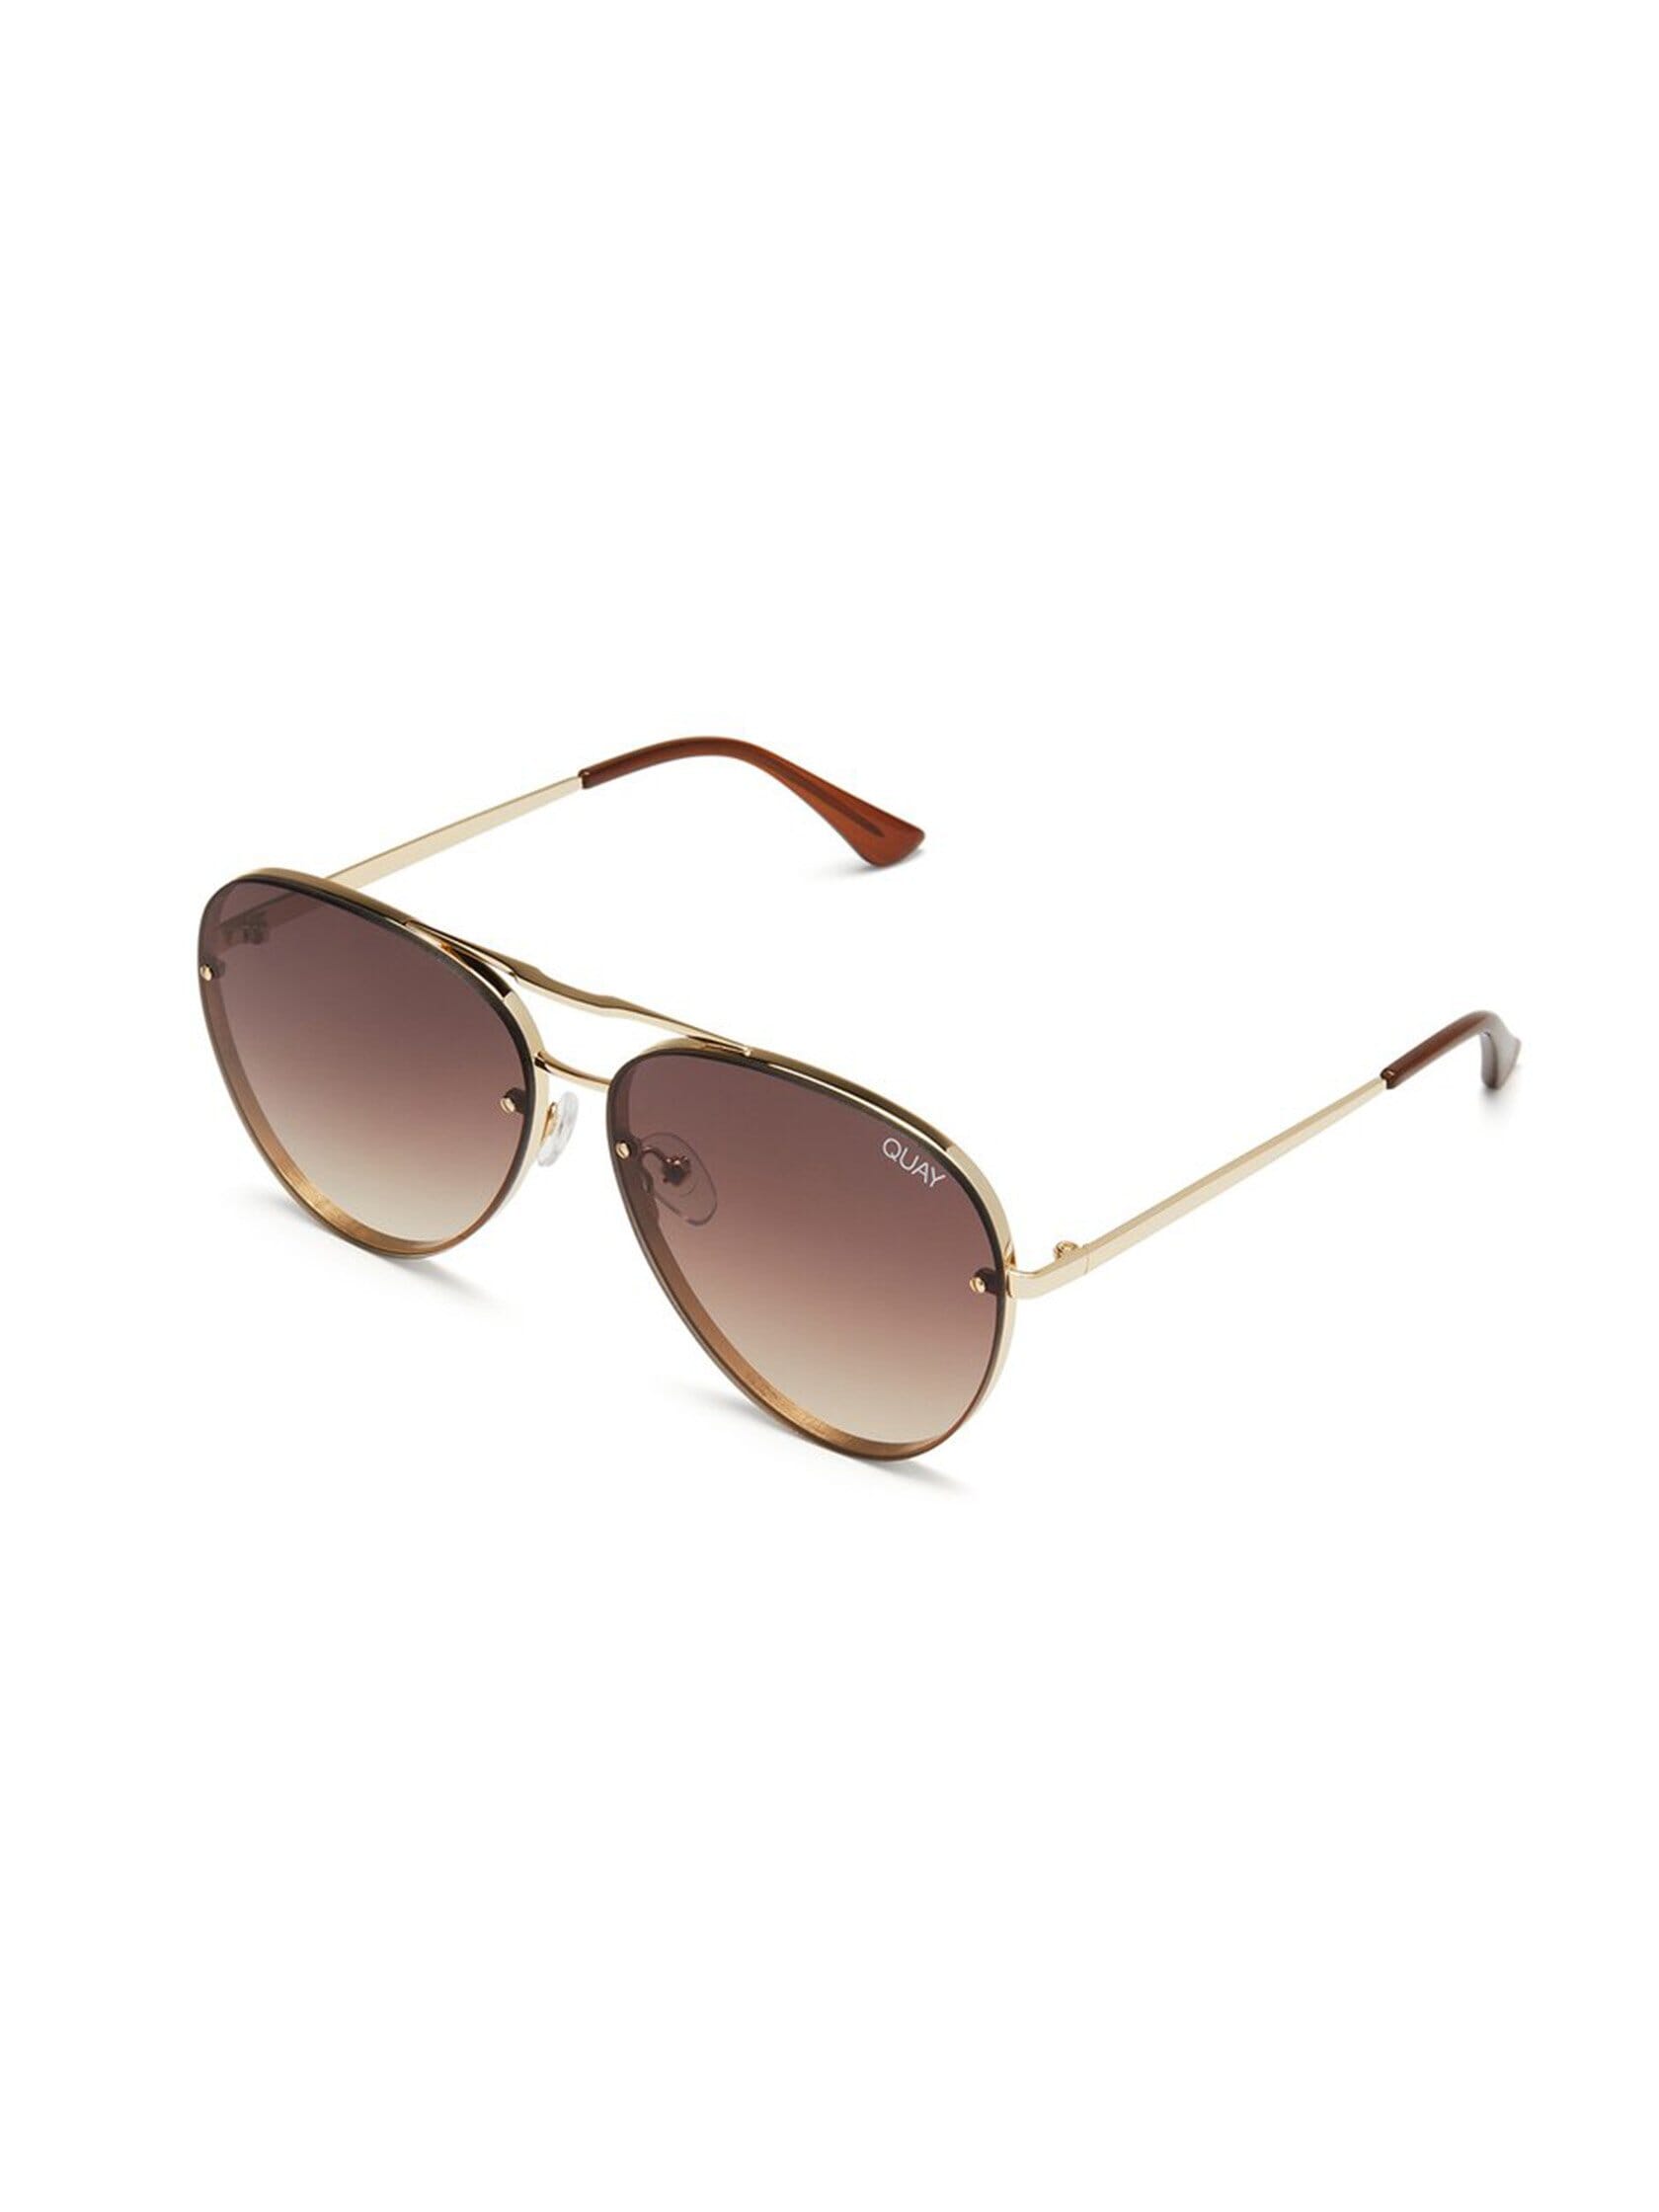 Quay Australia Cool Innit Sunglasses in Gold/Brown